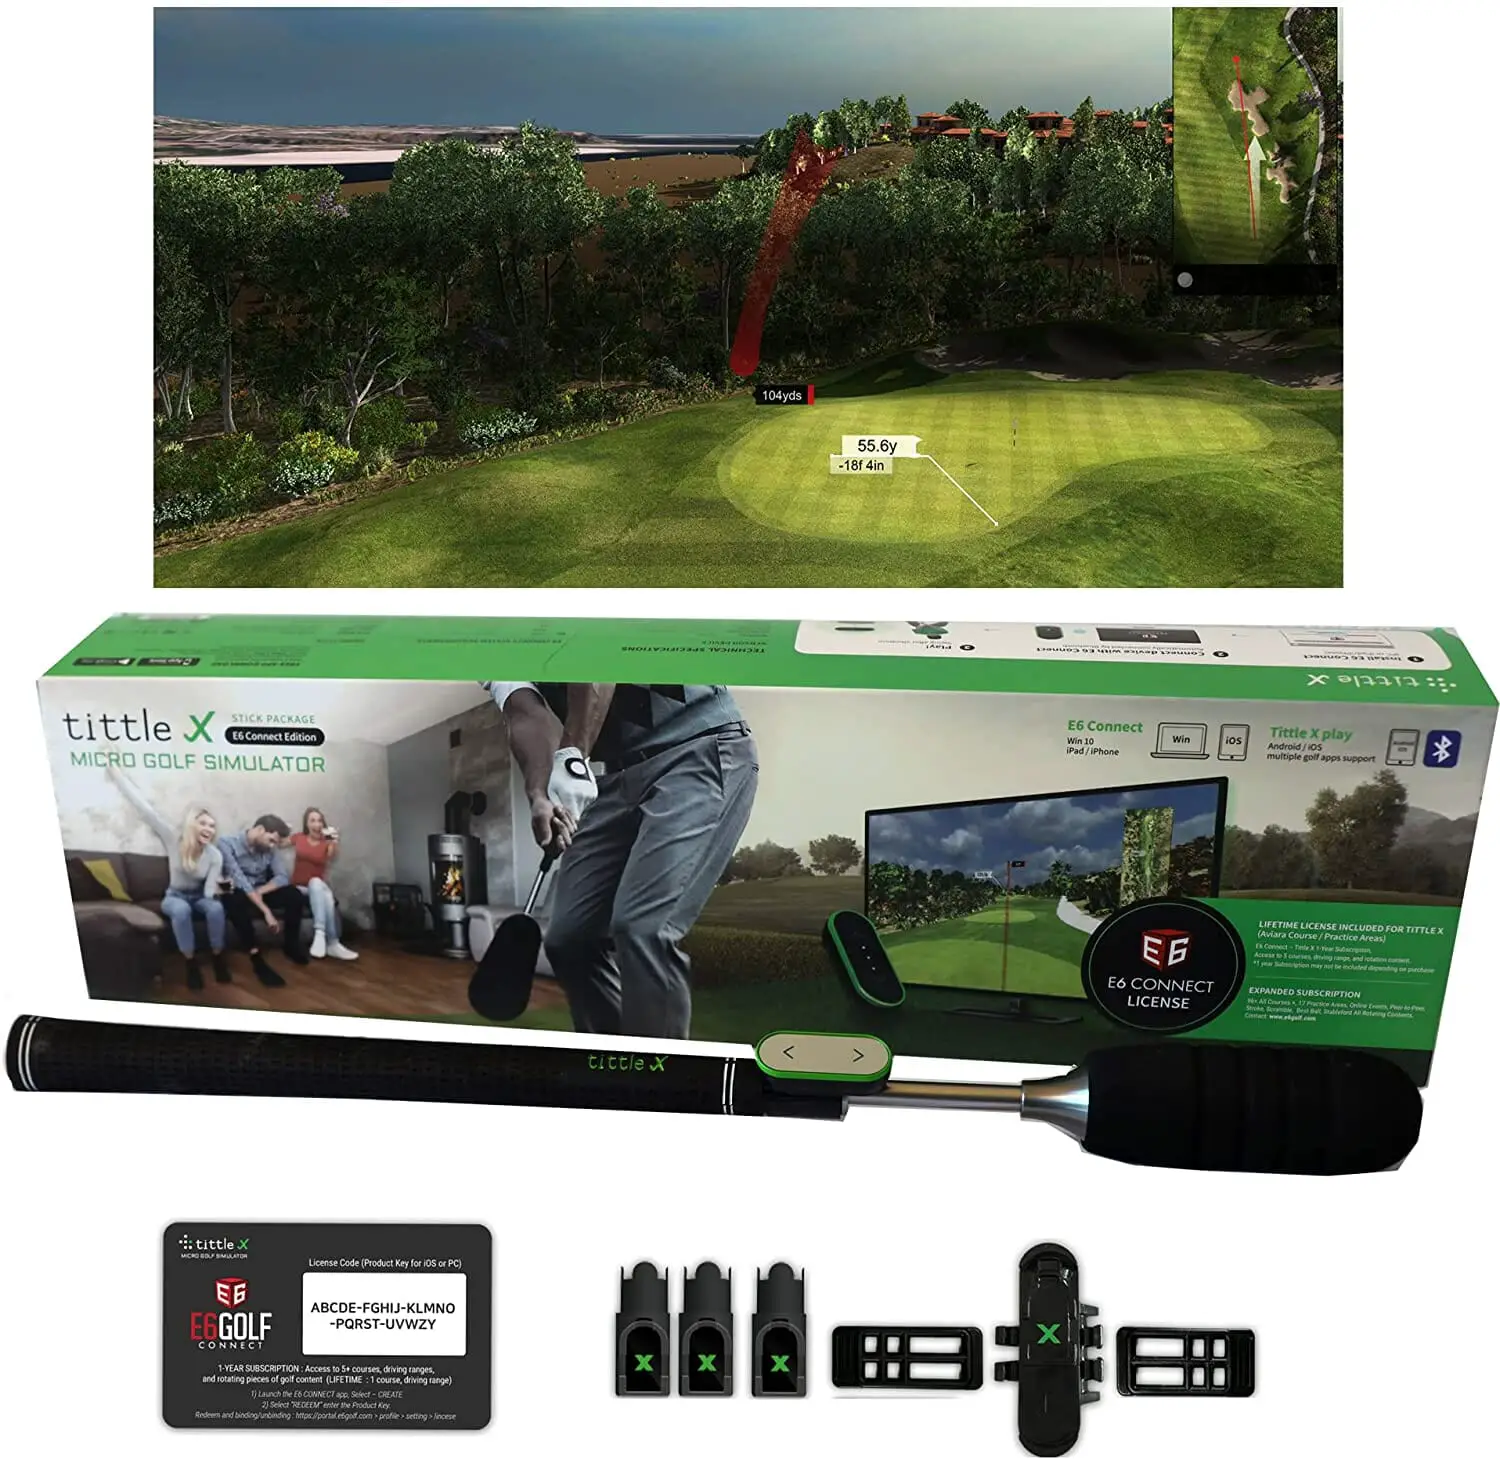 Title X home golf simulator